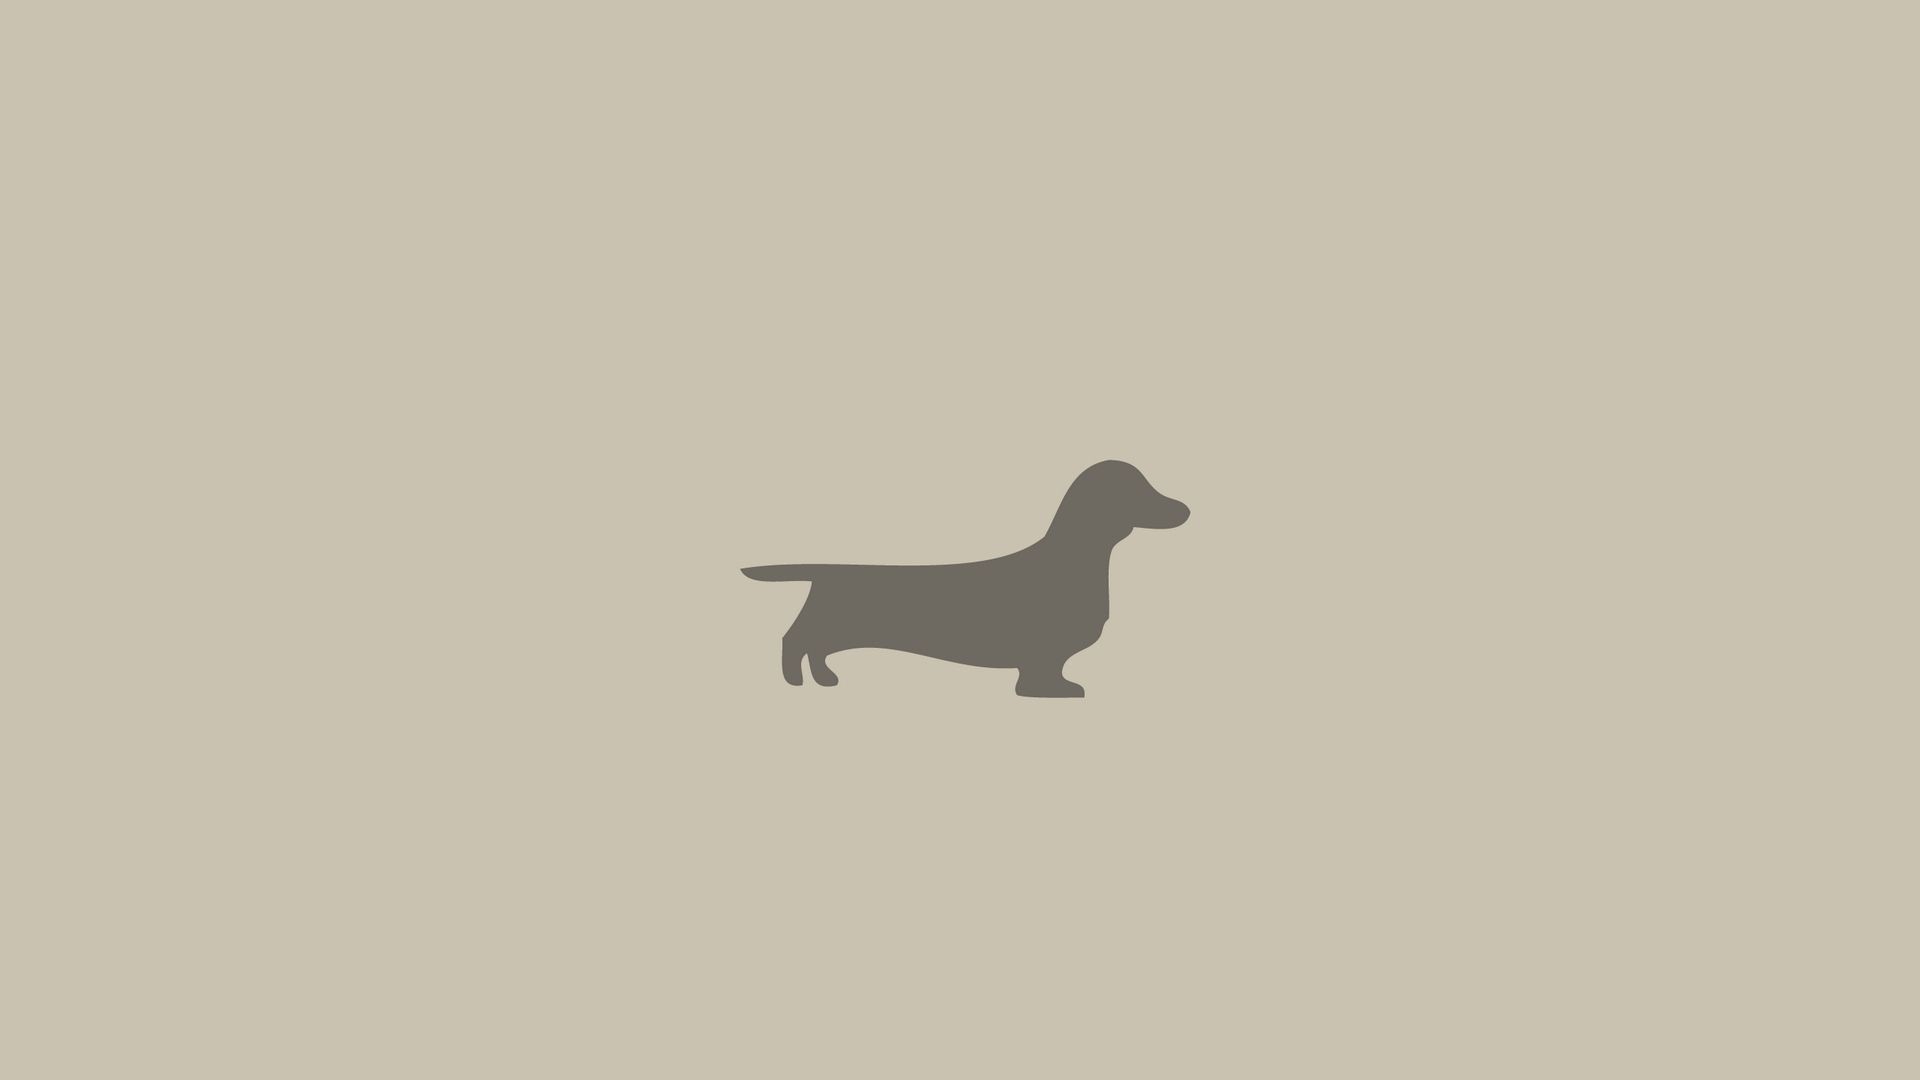 Download wallpaper 1920x1080 dachshund, dog, minimalism, animal full hd, hdtv, fhd, 1080p HD background